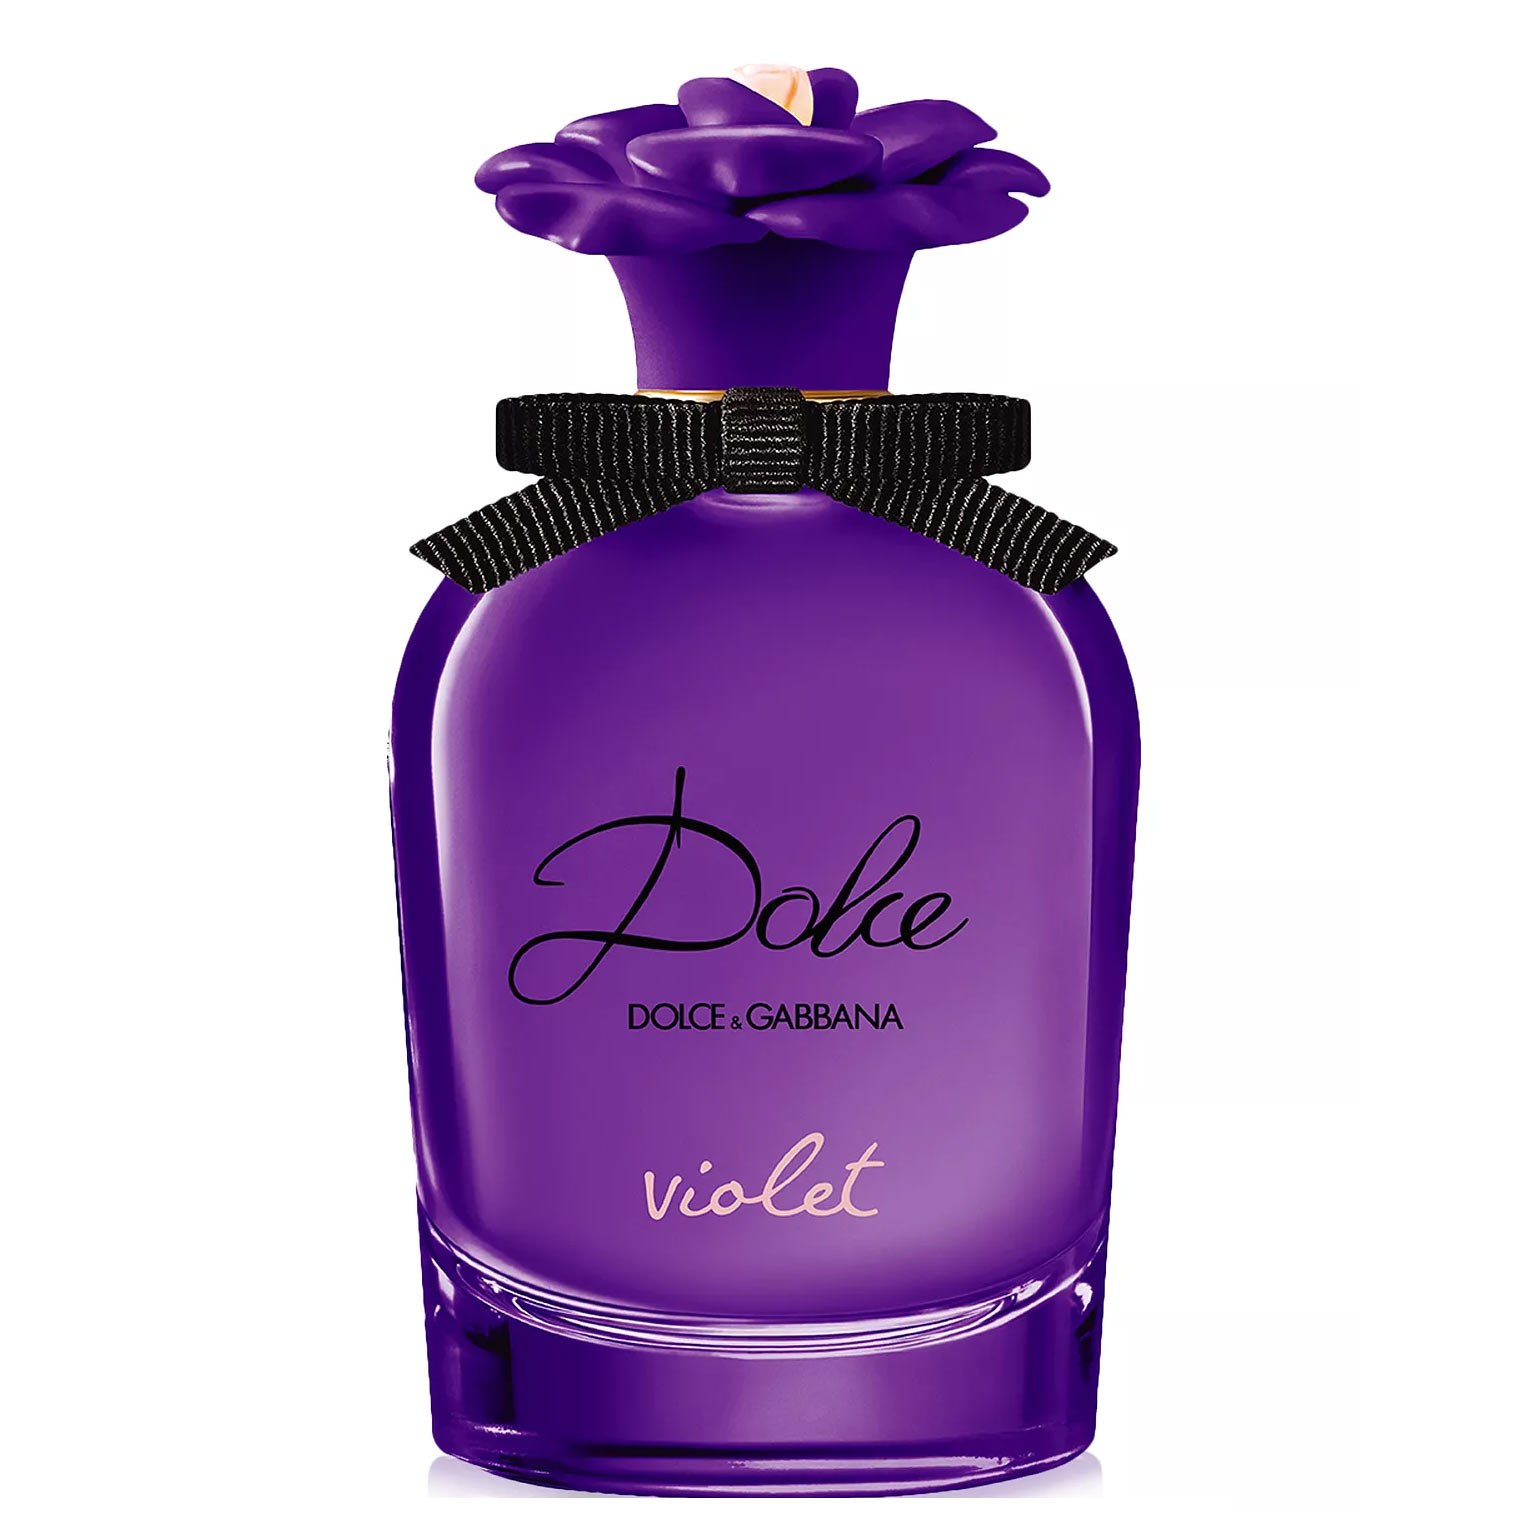 Dolce-Violet-Dolce-and-Gabbana